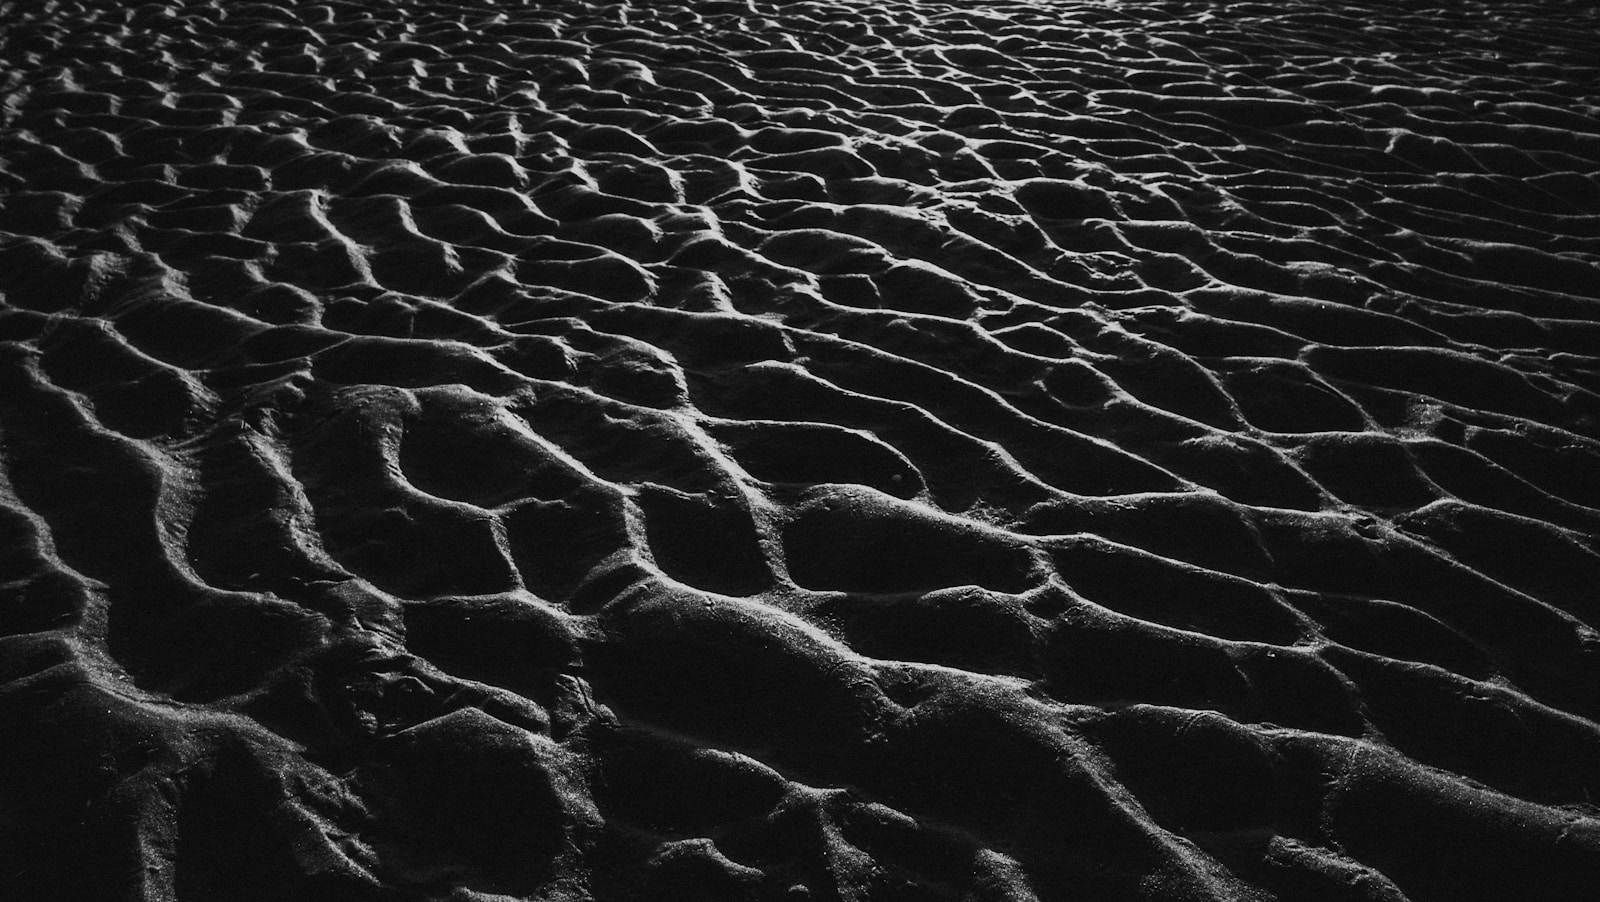 a black and white photo of a sandy beach